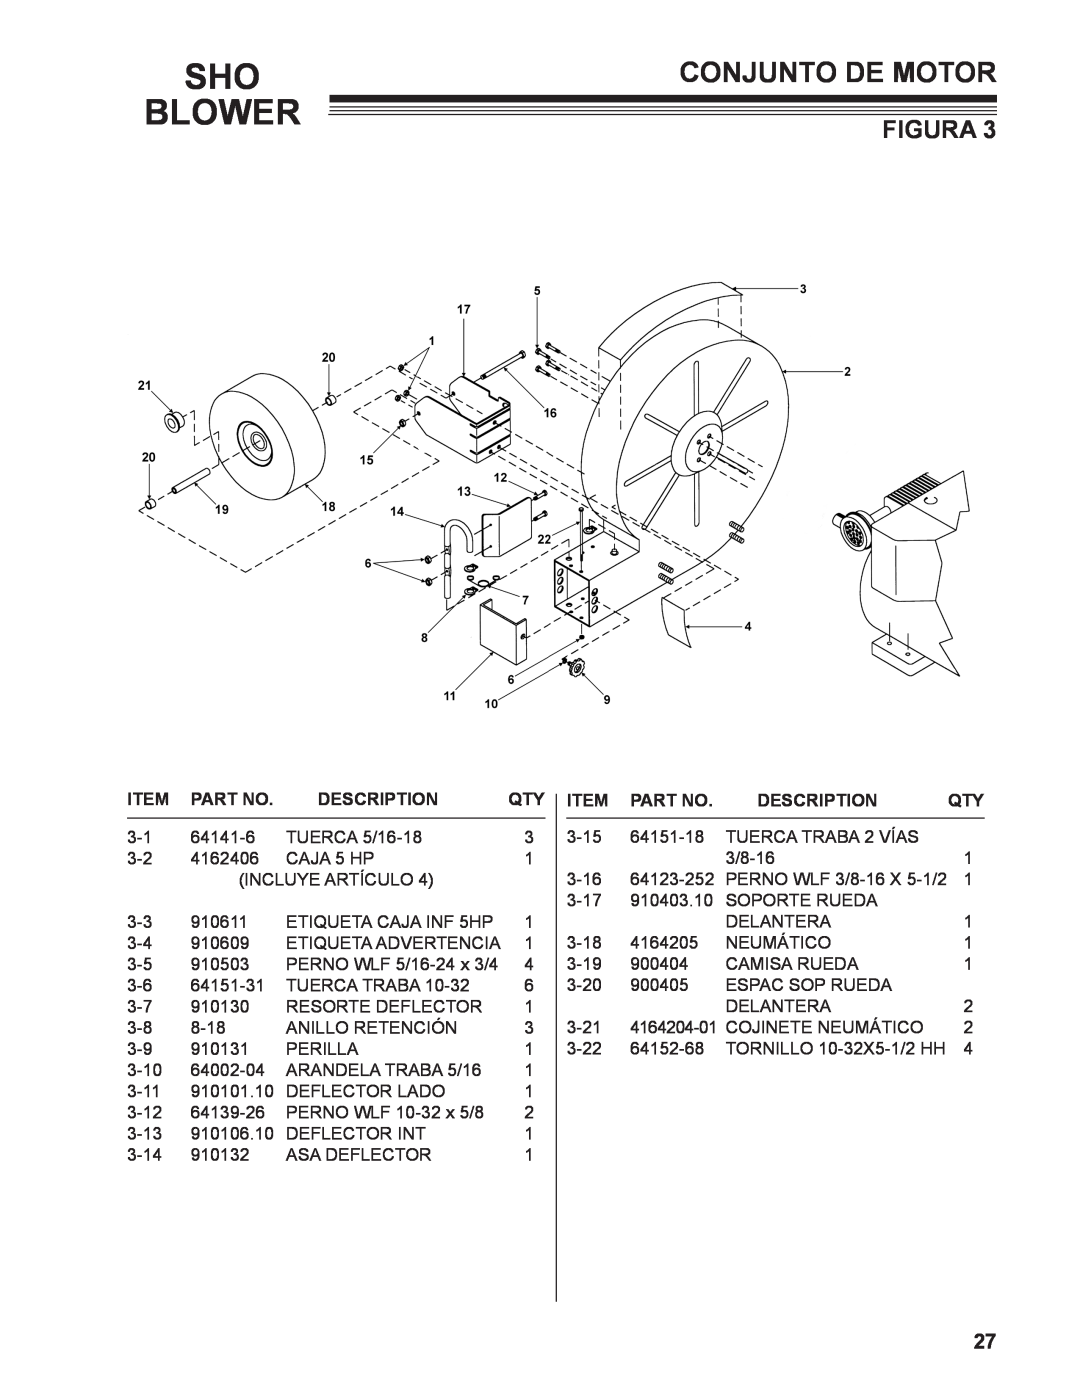 Little Wonder 9502-00-01 technical manual Sho Blower, Conjunto De Motor, Figura, Description 